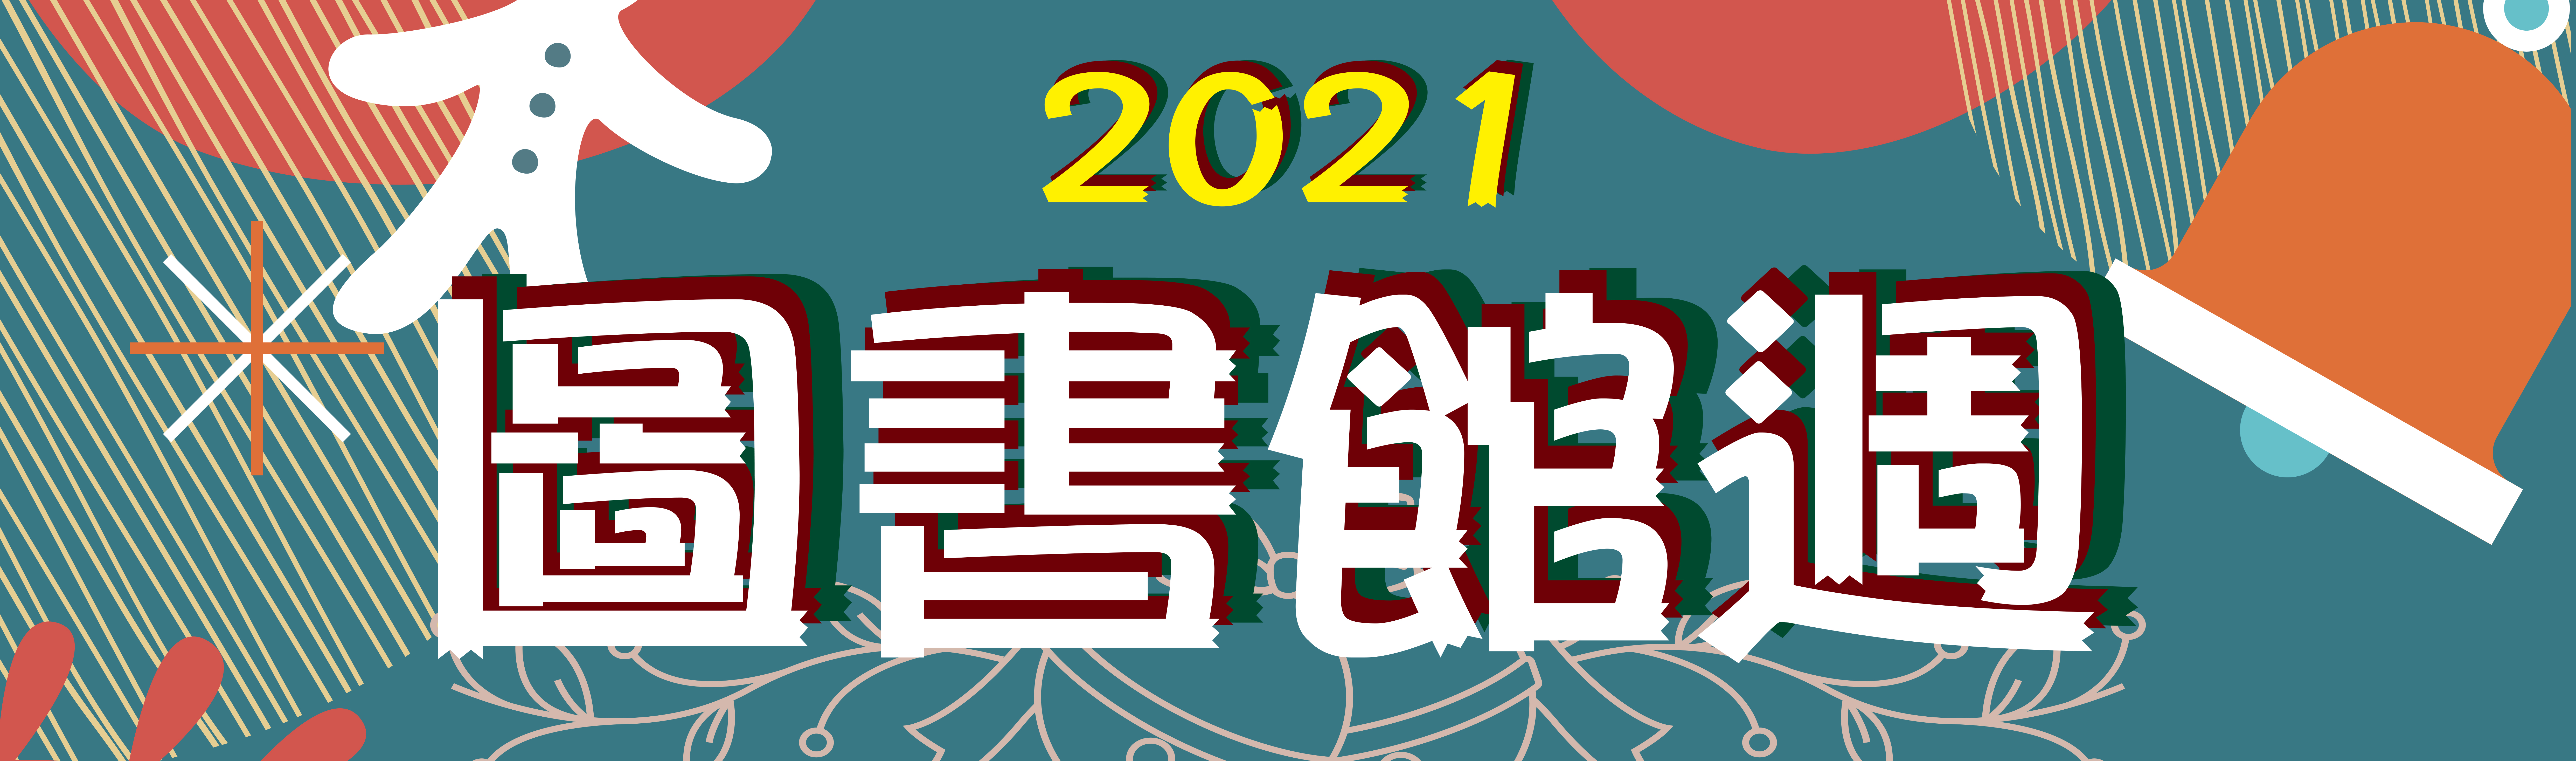 2021banner